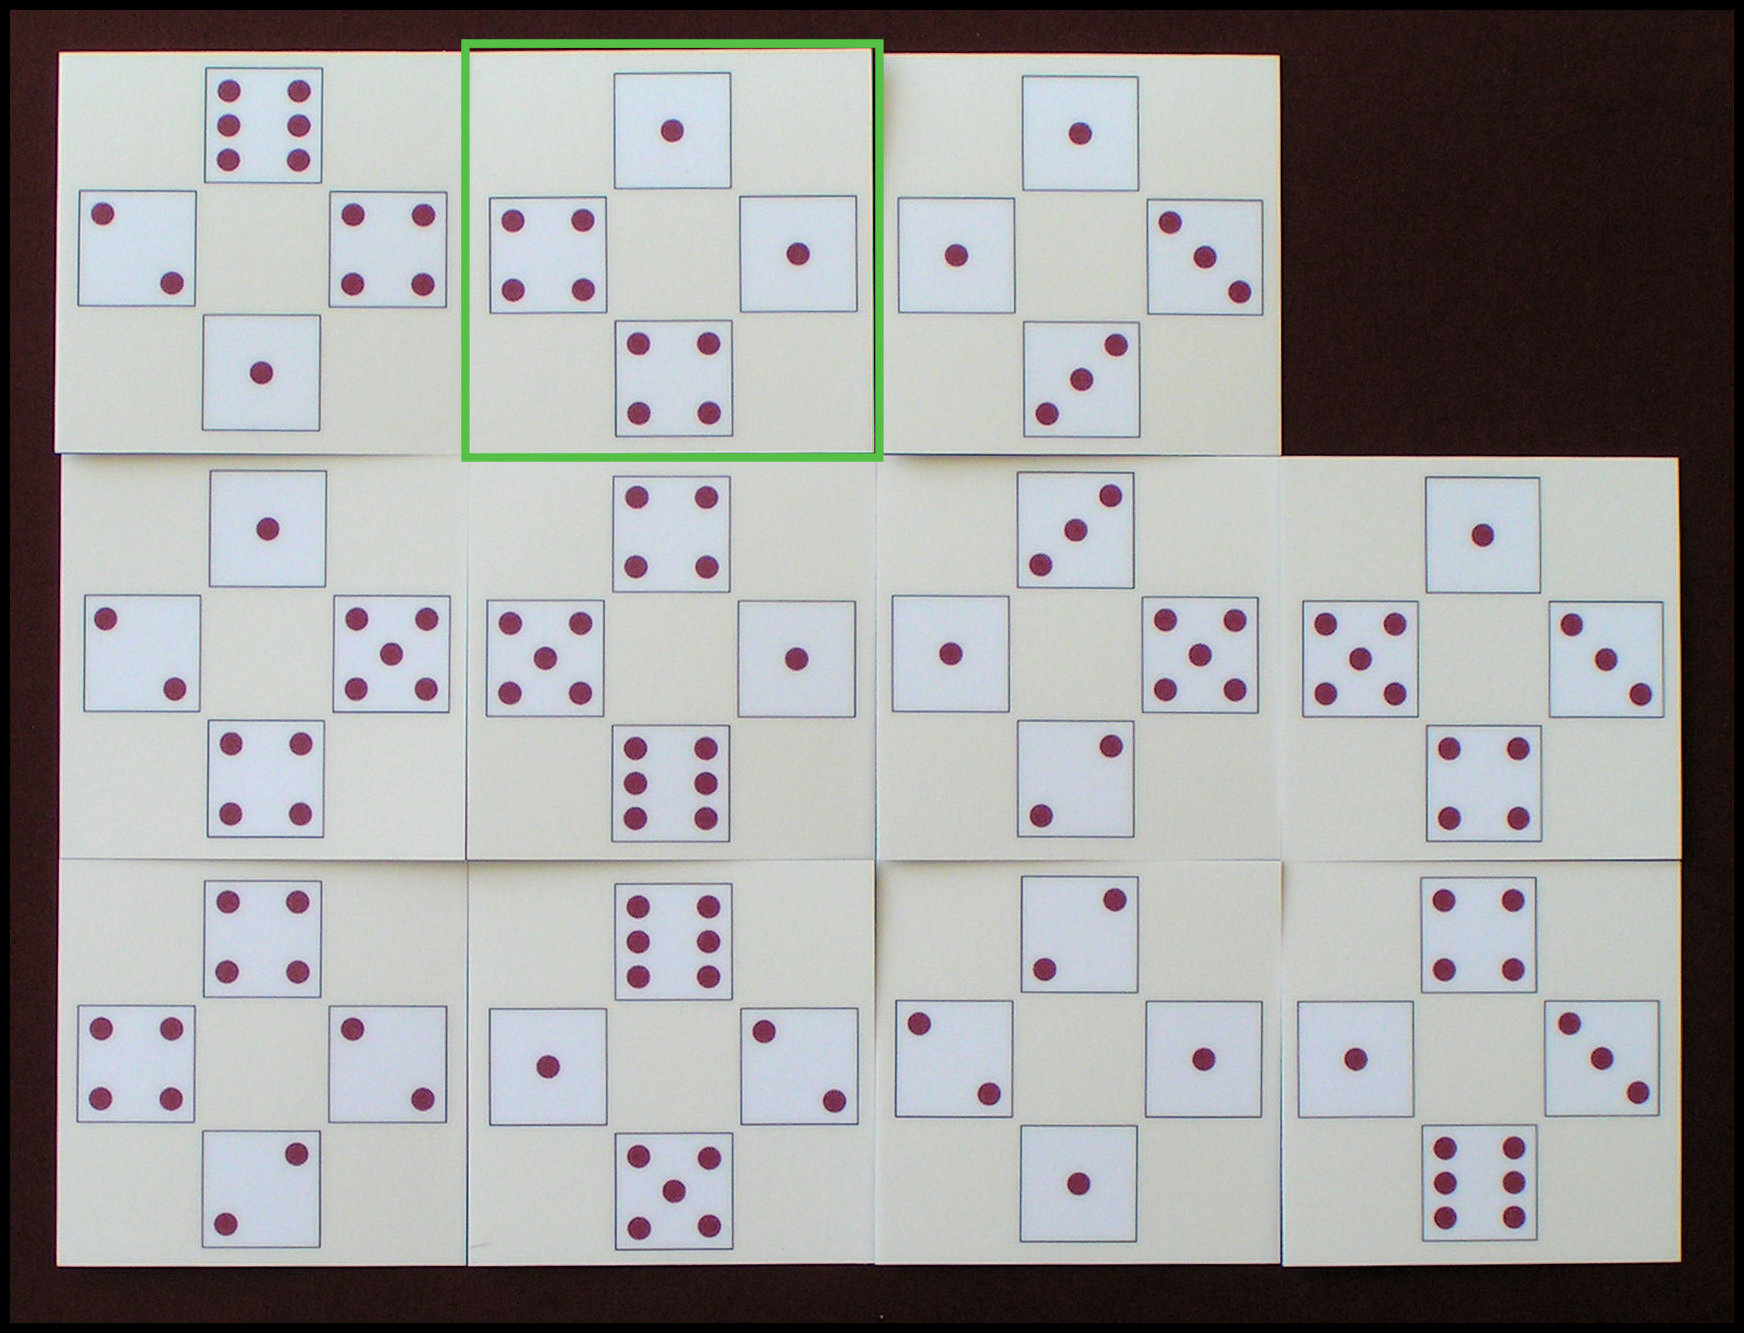 Quadominoes - A Nine-Point Tile Play